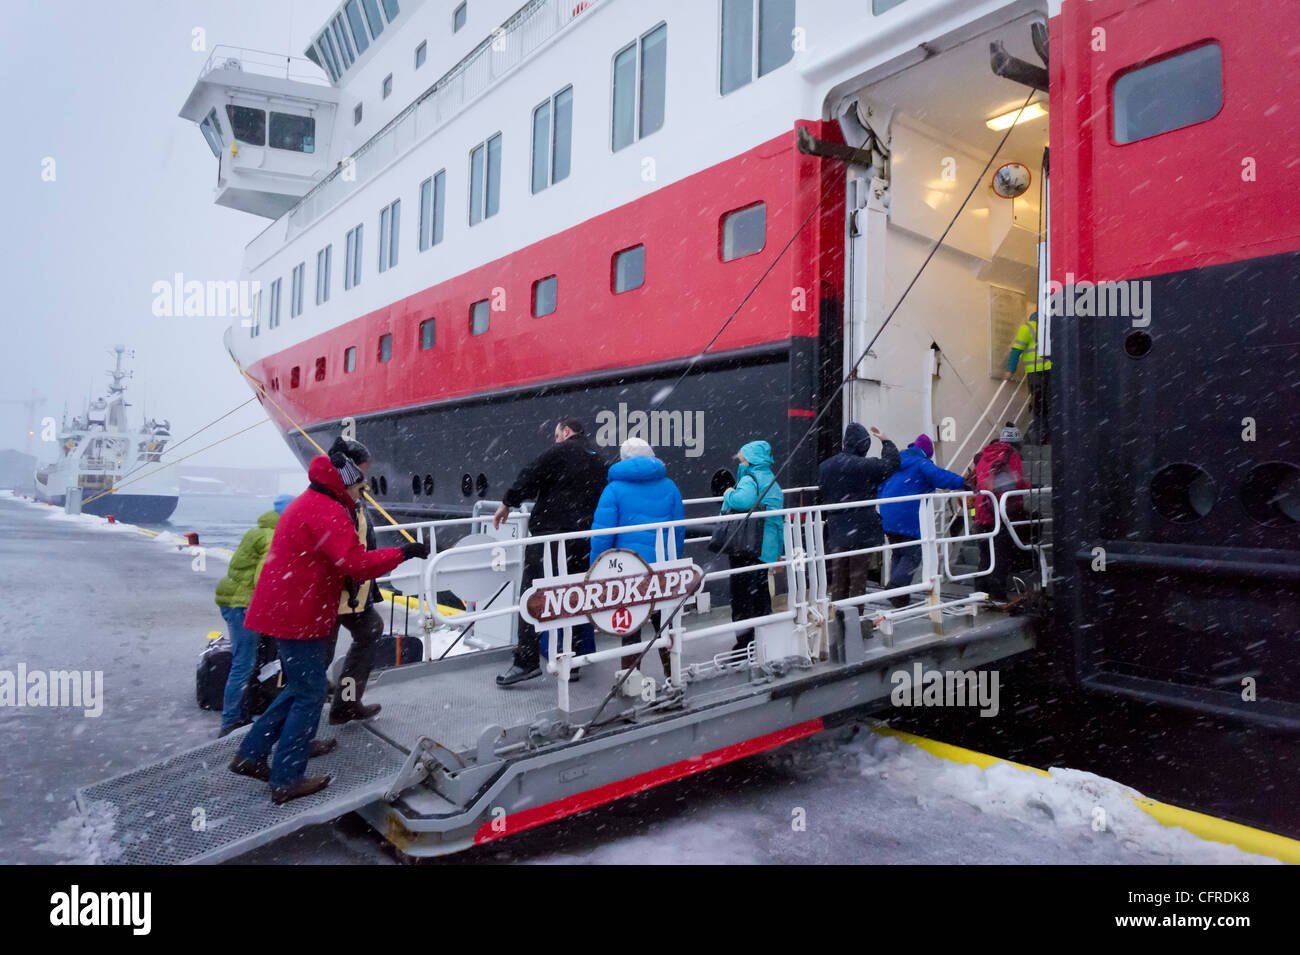 Nordkapp Hurtigruten cruise ship loading passengers for an arctic circle cruise trip Tromso harbour North Norway Europe Stock Photo